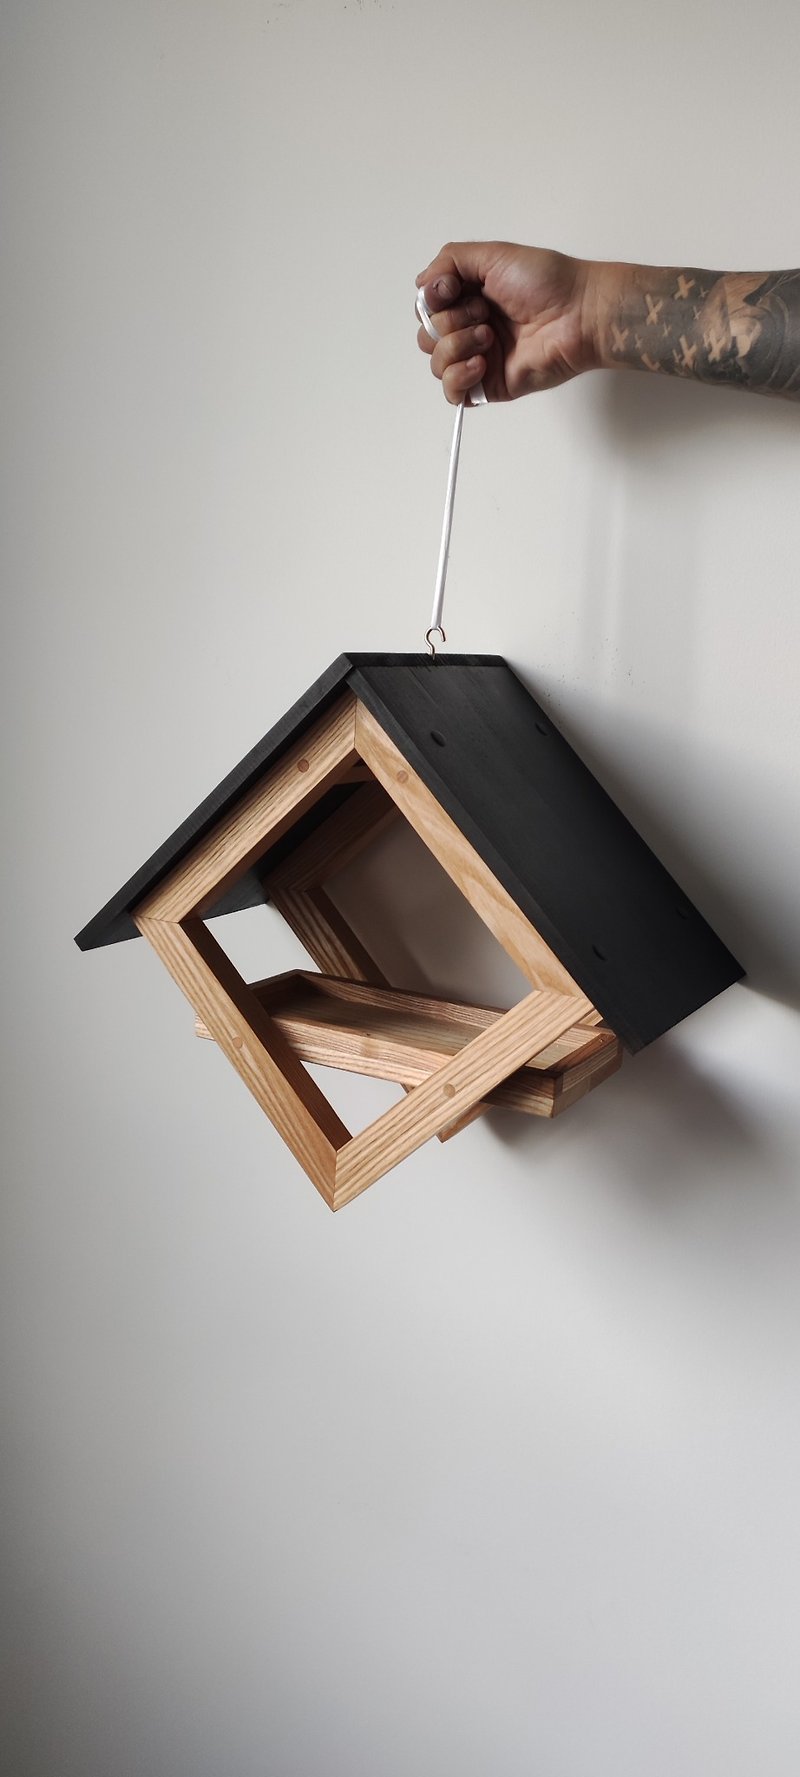 Wooden hanging bird feeder - 其他 - 木頭 咖啡色